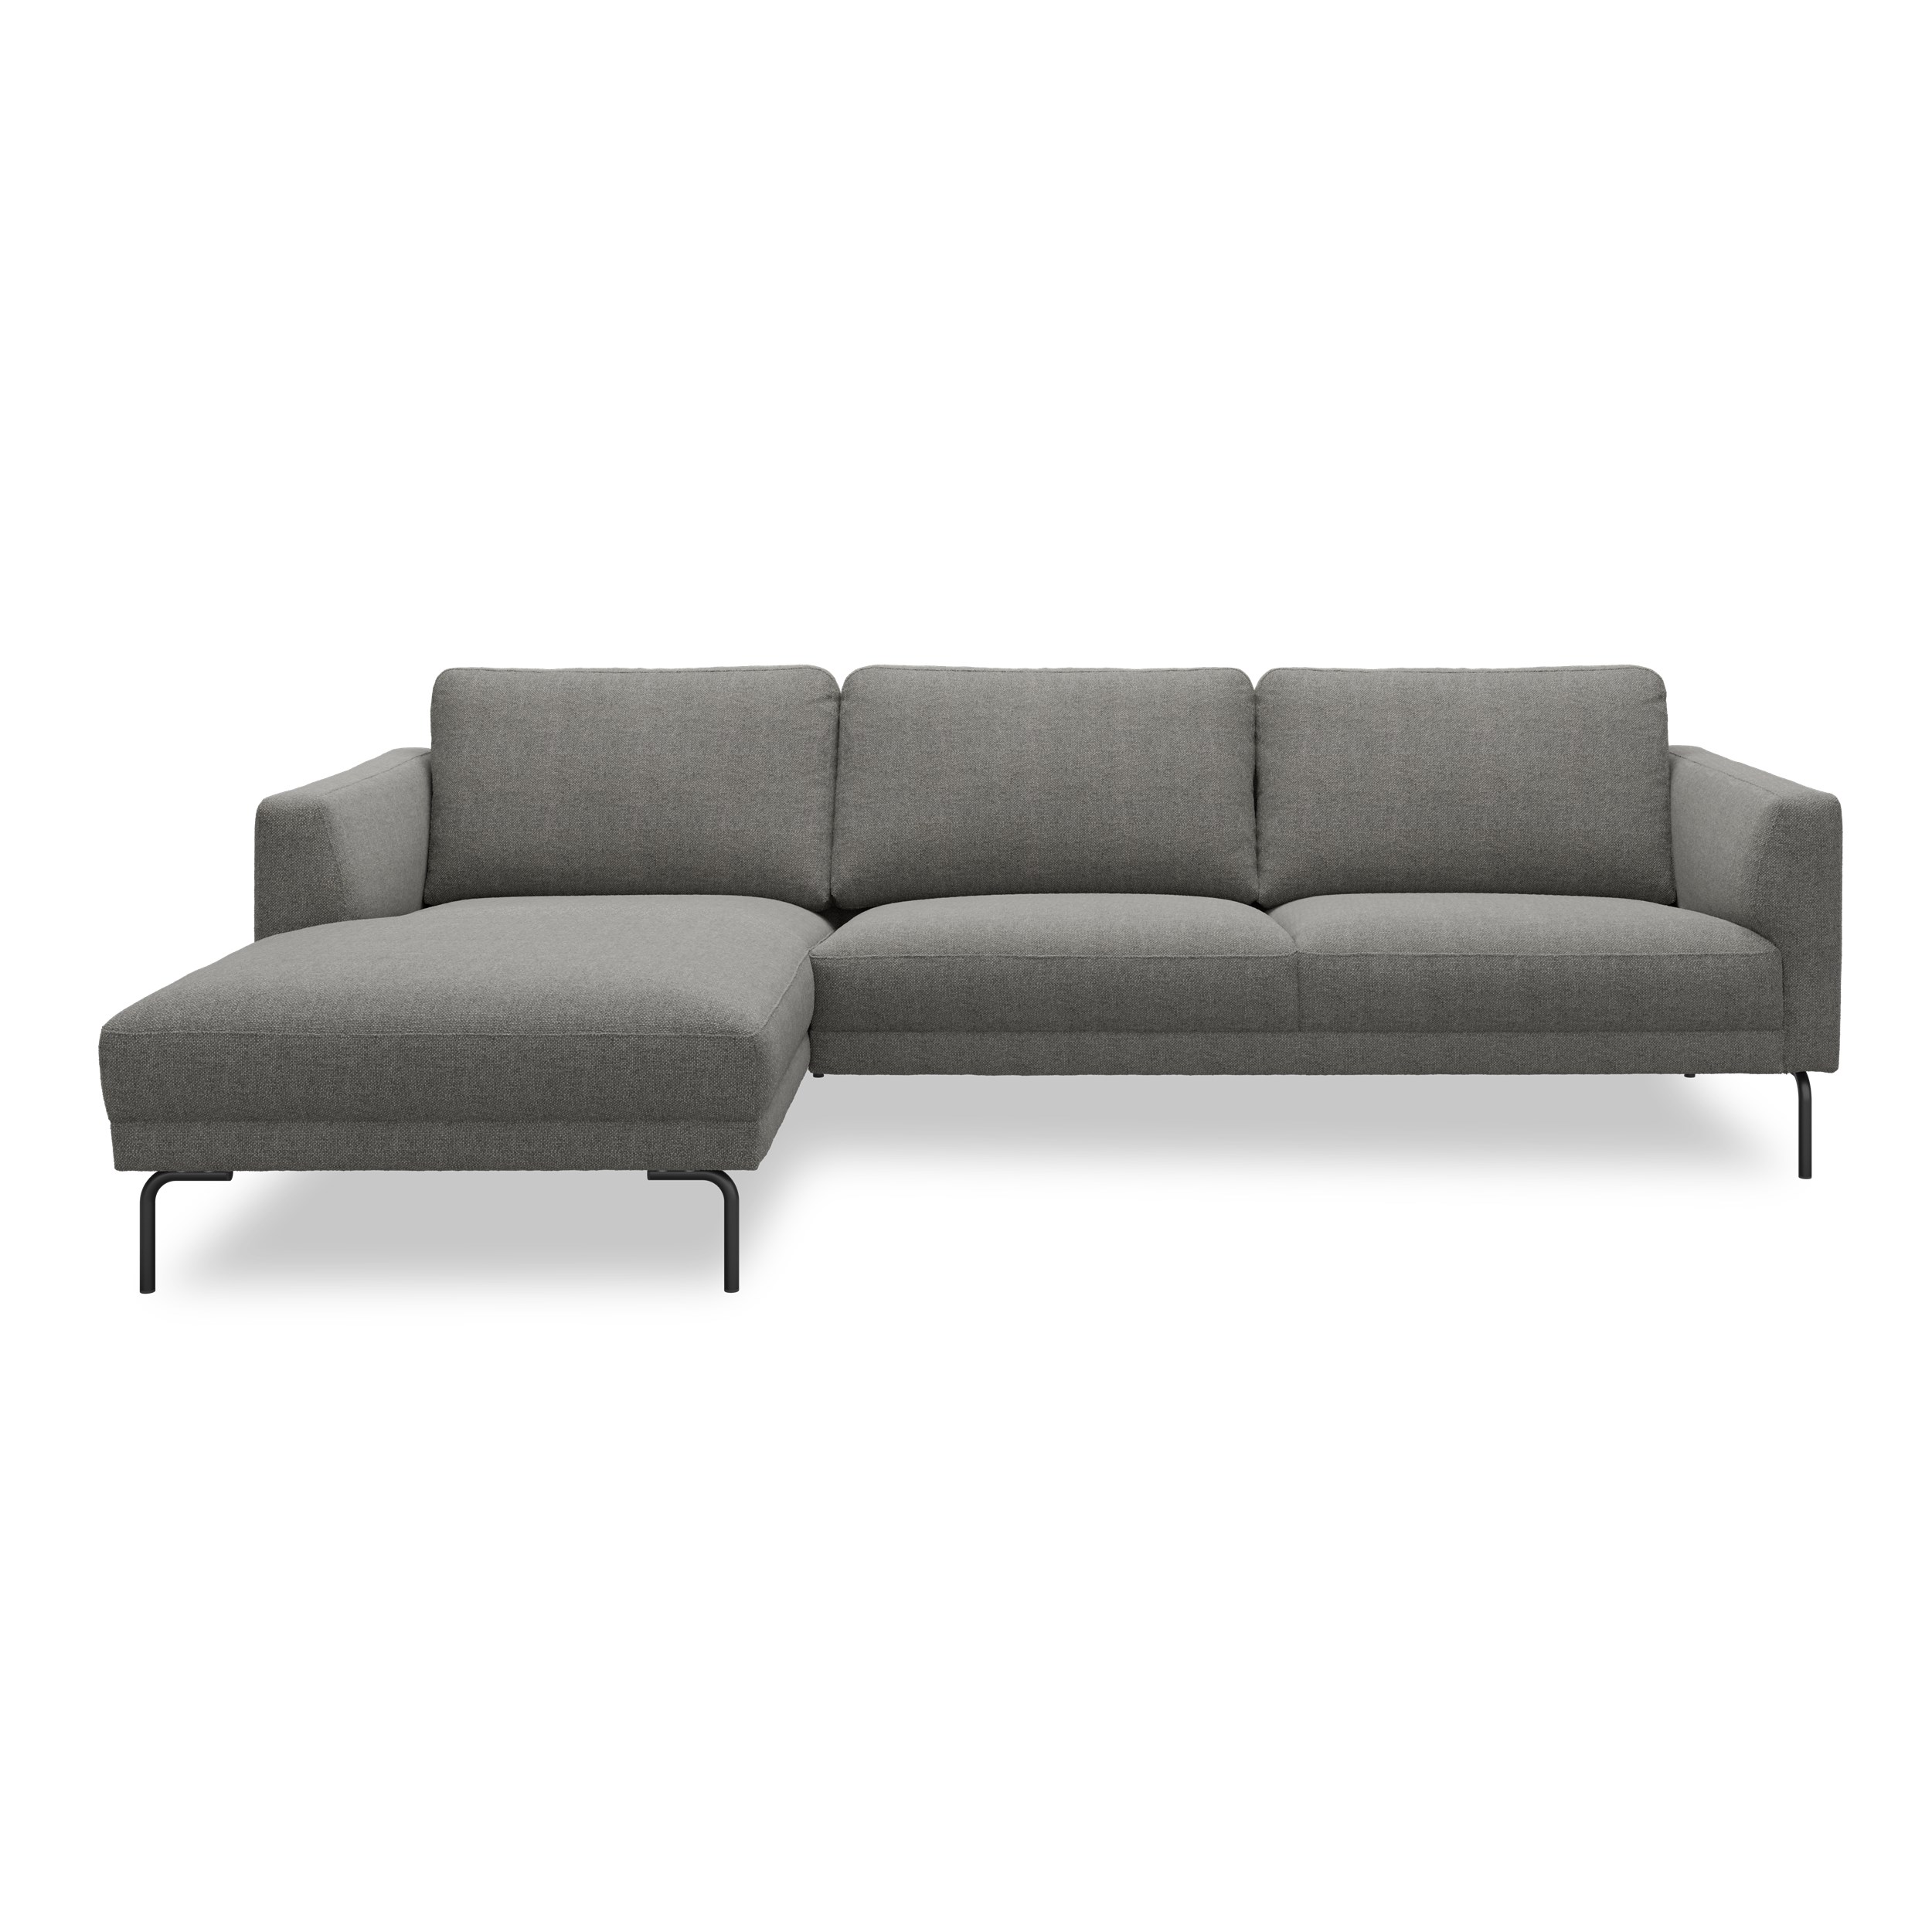 Springfield Sofa med chaiselong - Rate 68 Dark grey stof og ben i sort metal